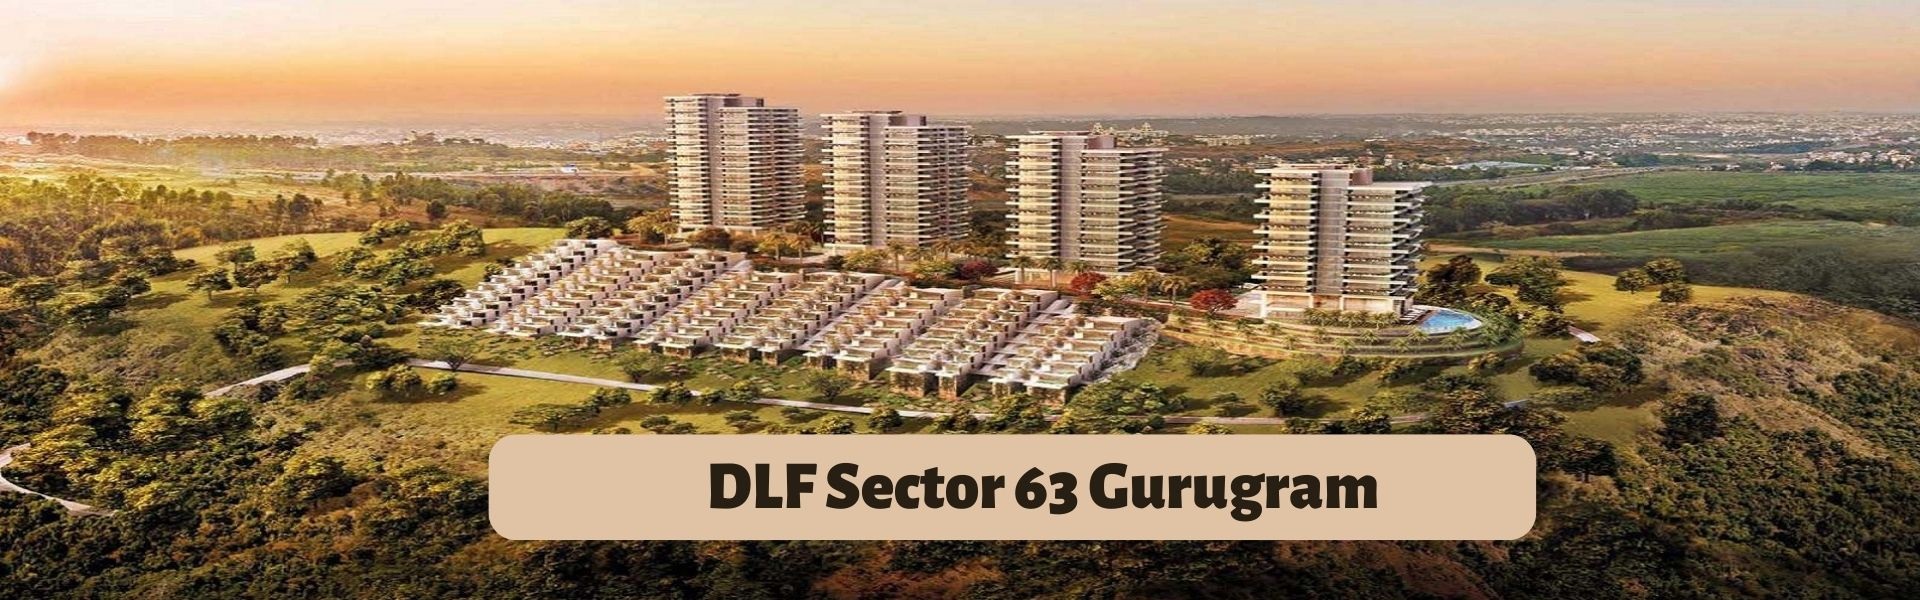 DLF Projects Sector 63 Gurugram banner